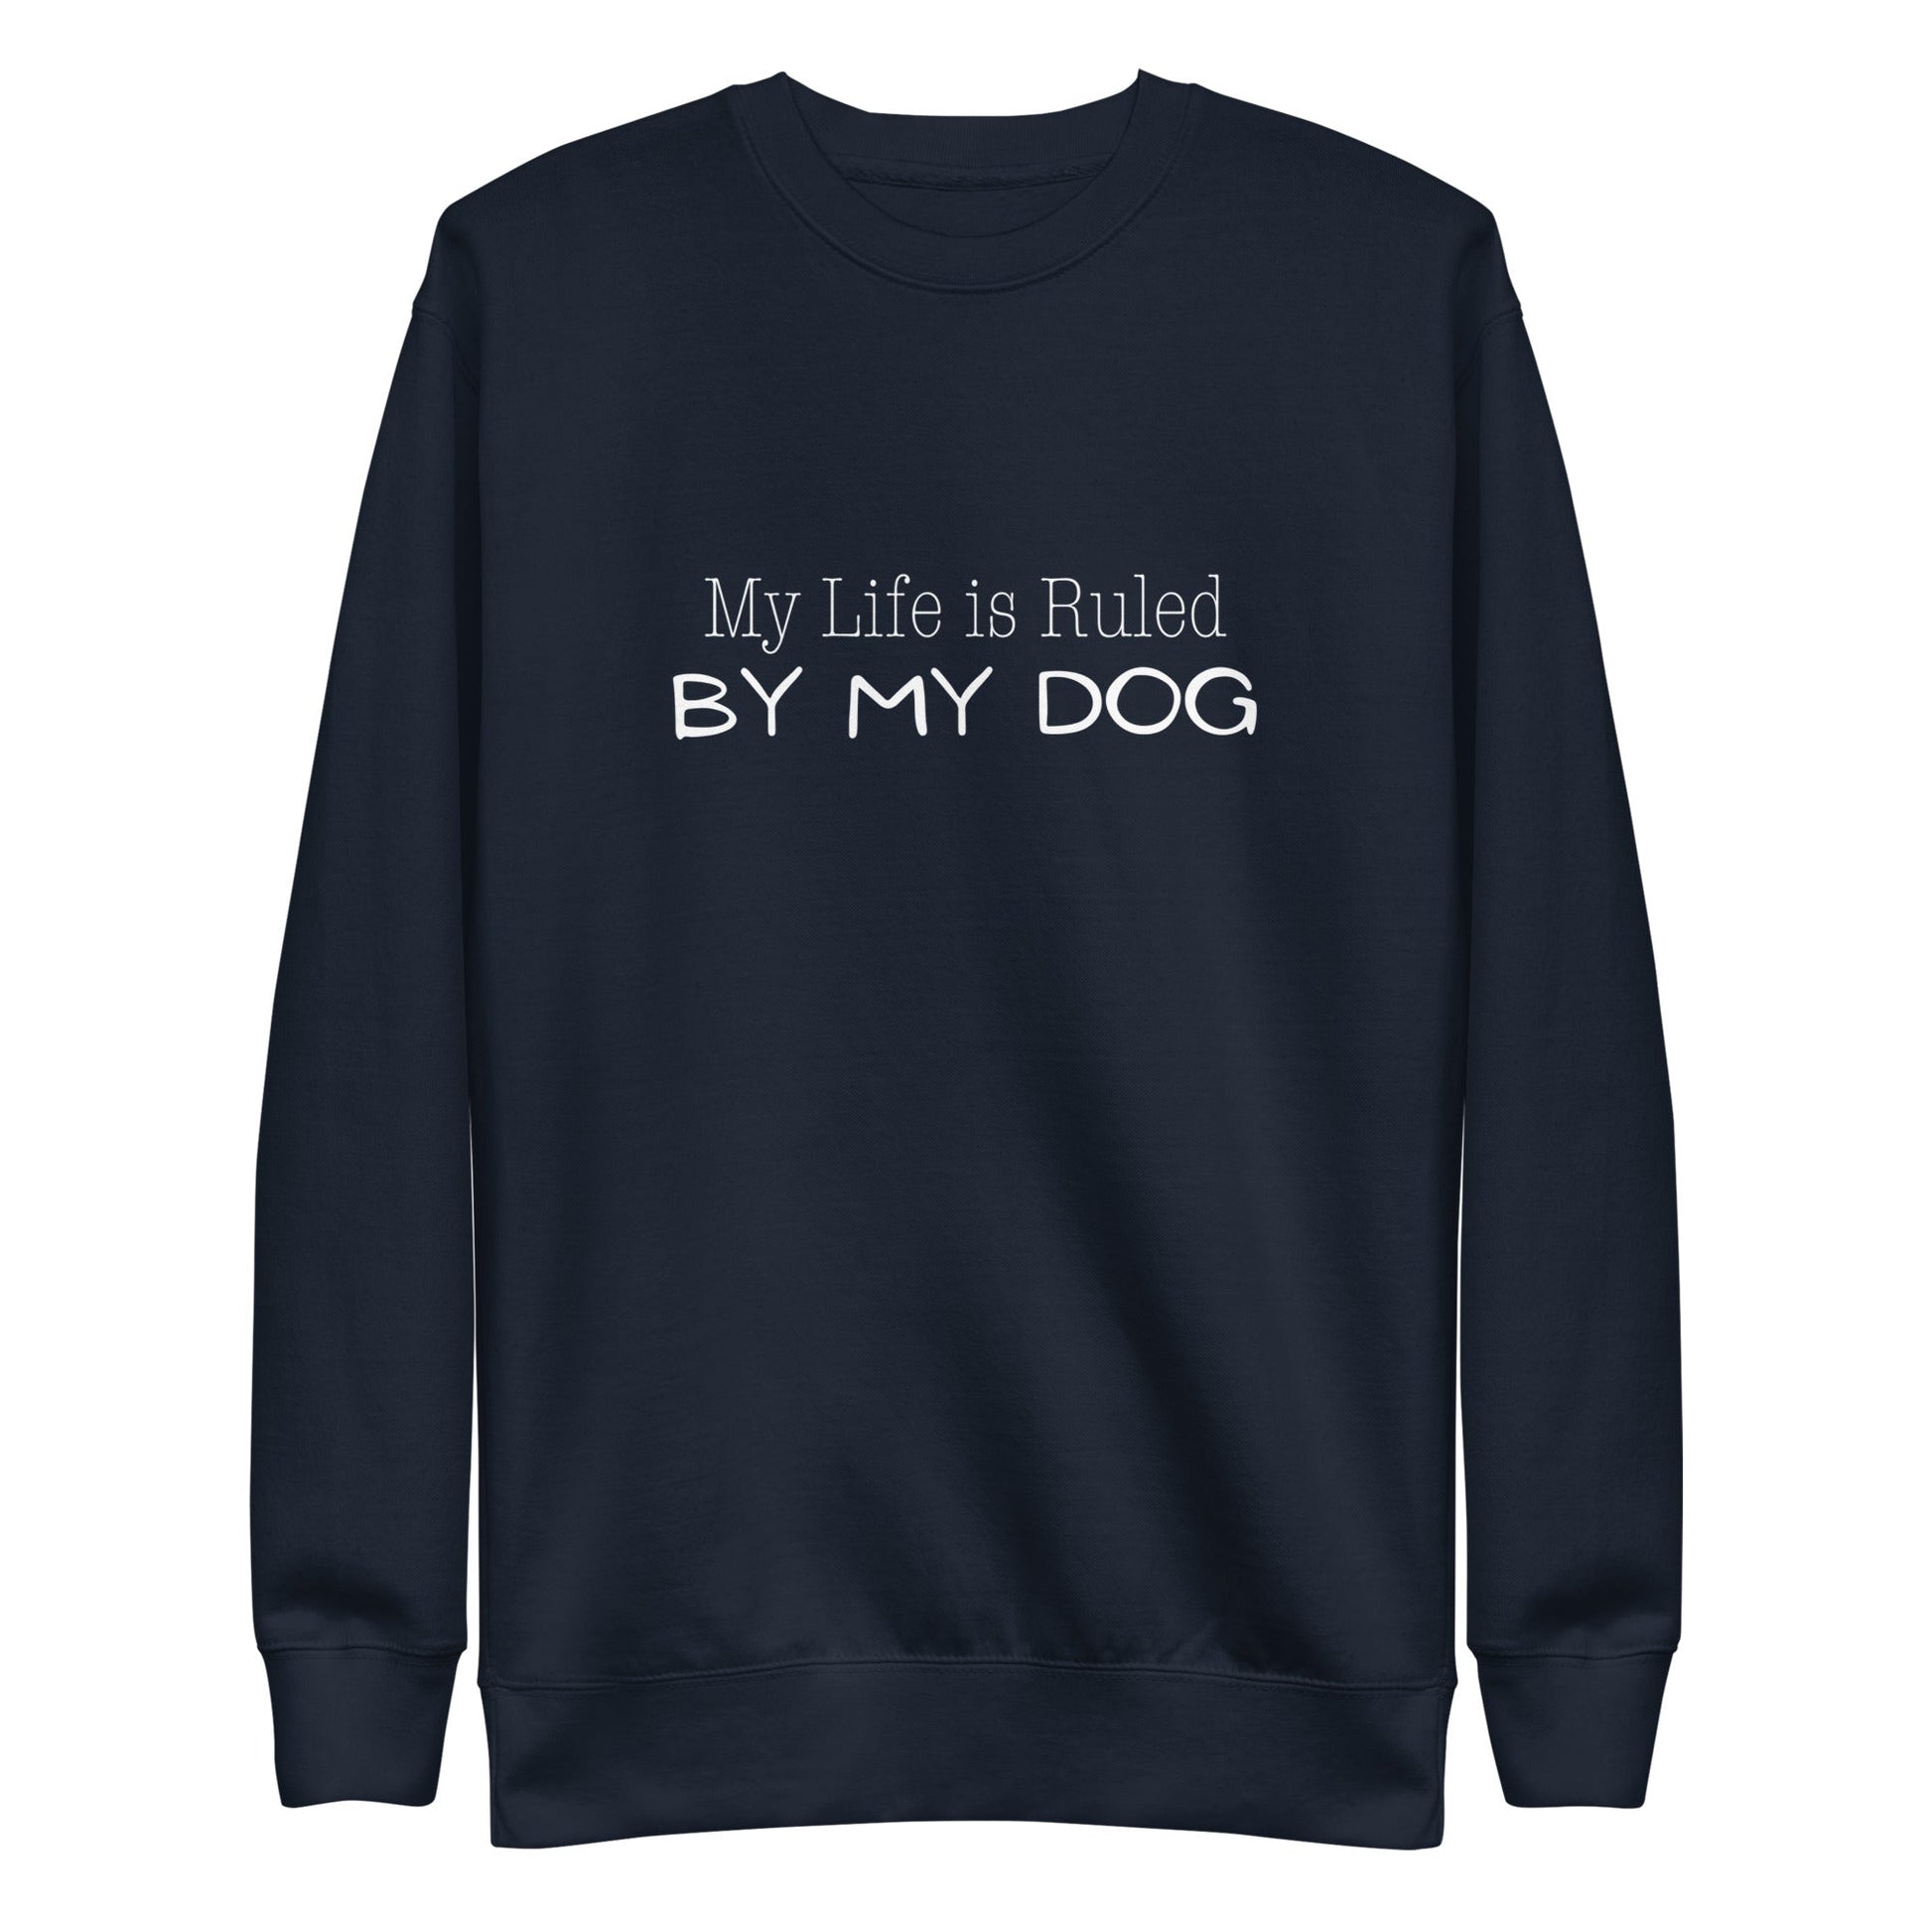 My Life is Ruled by Dog Sweatshirt - Navy Blazer / S